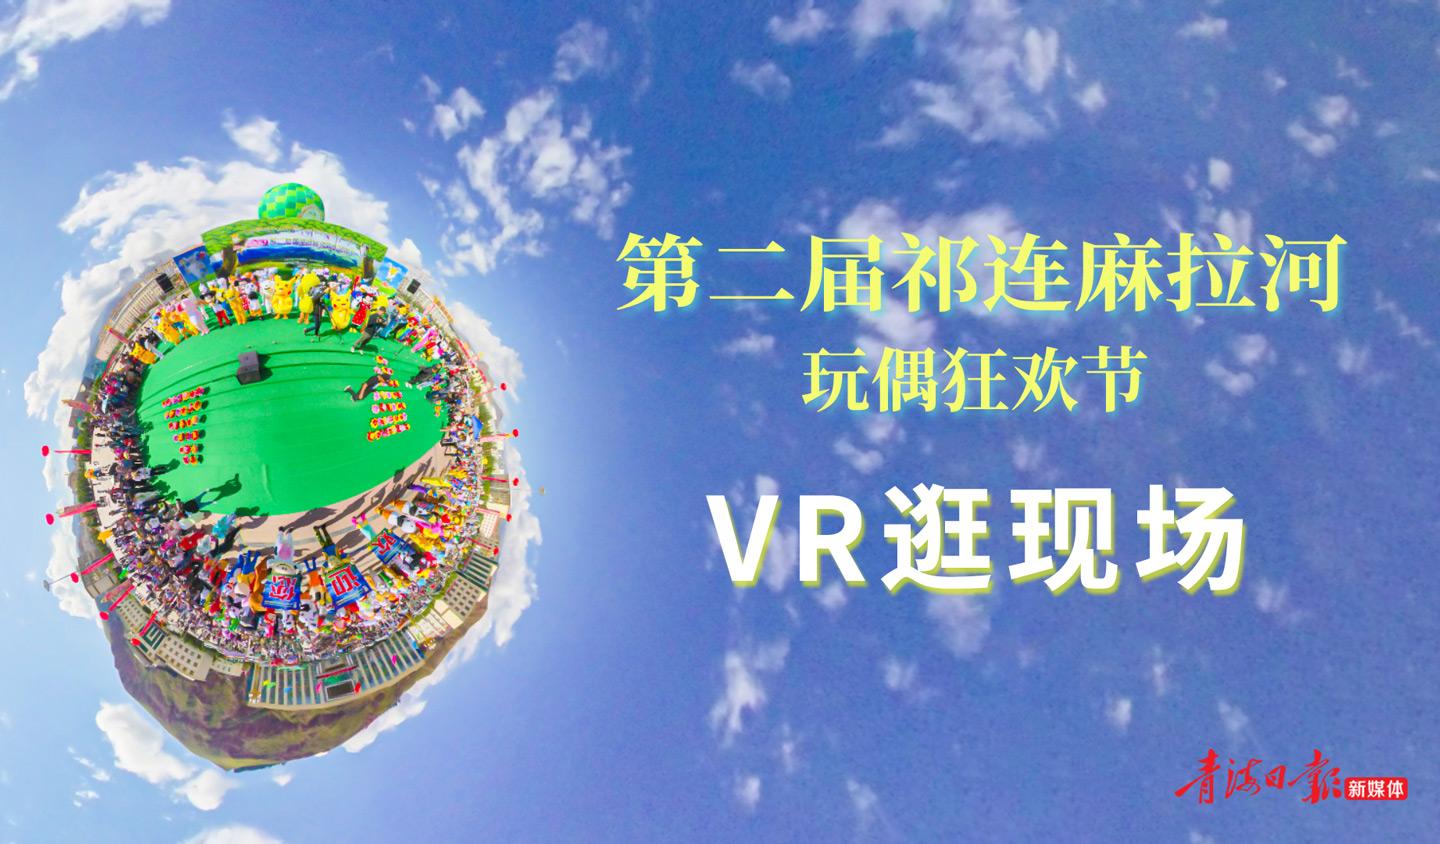 [VR图集]飞行小镇的童梦狂欢，第二届祁连麻拉河玩偶狂欢节来啦！